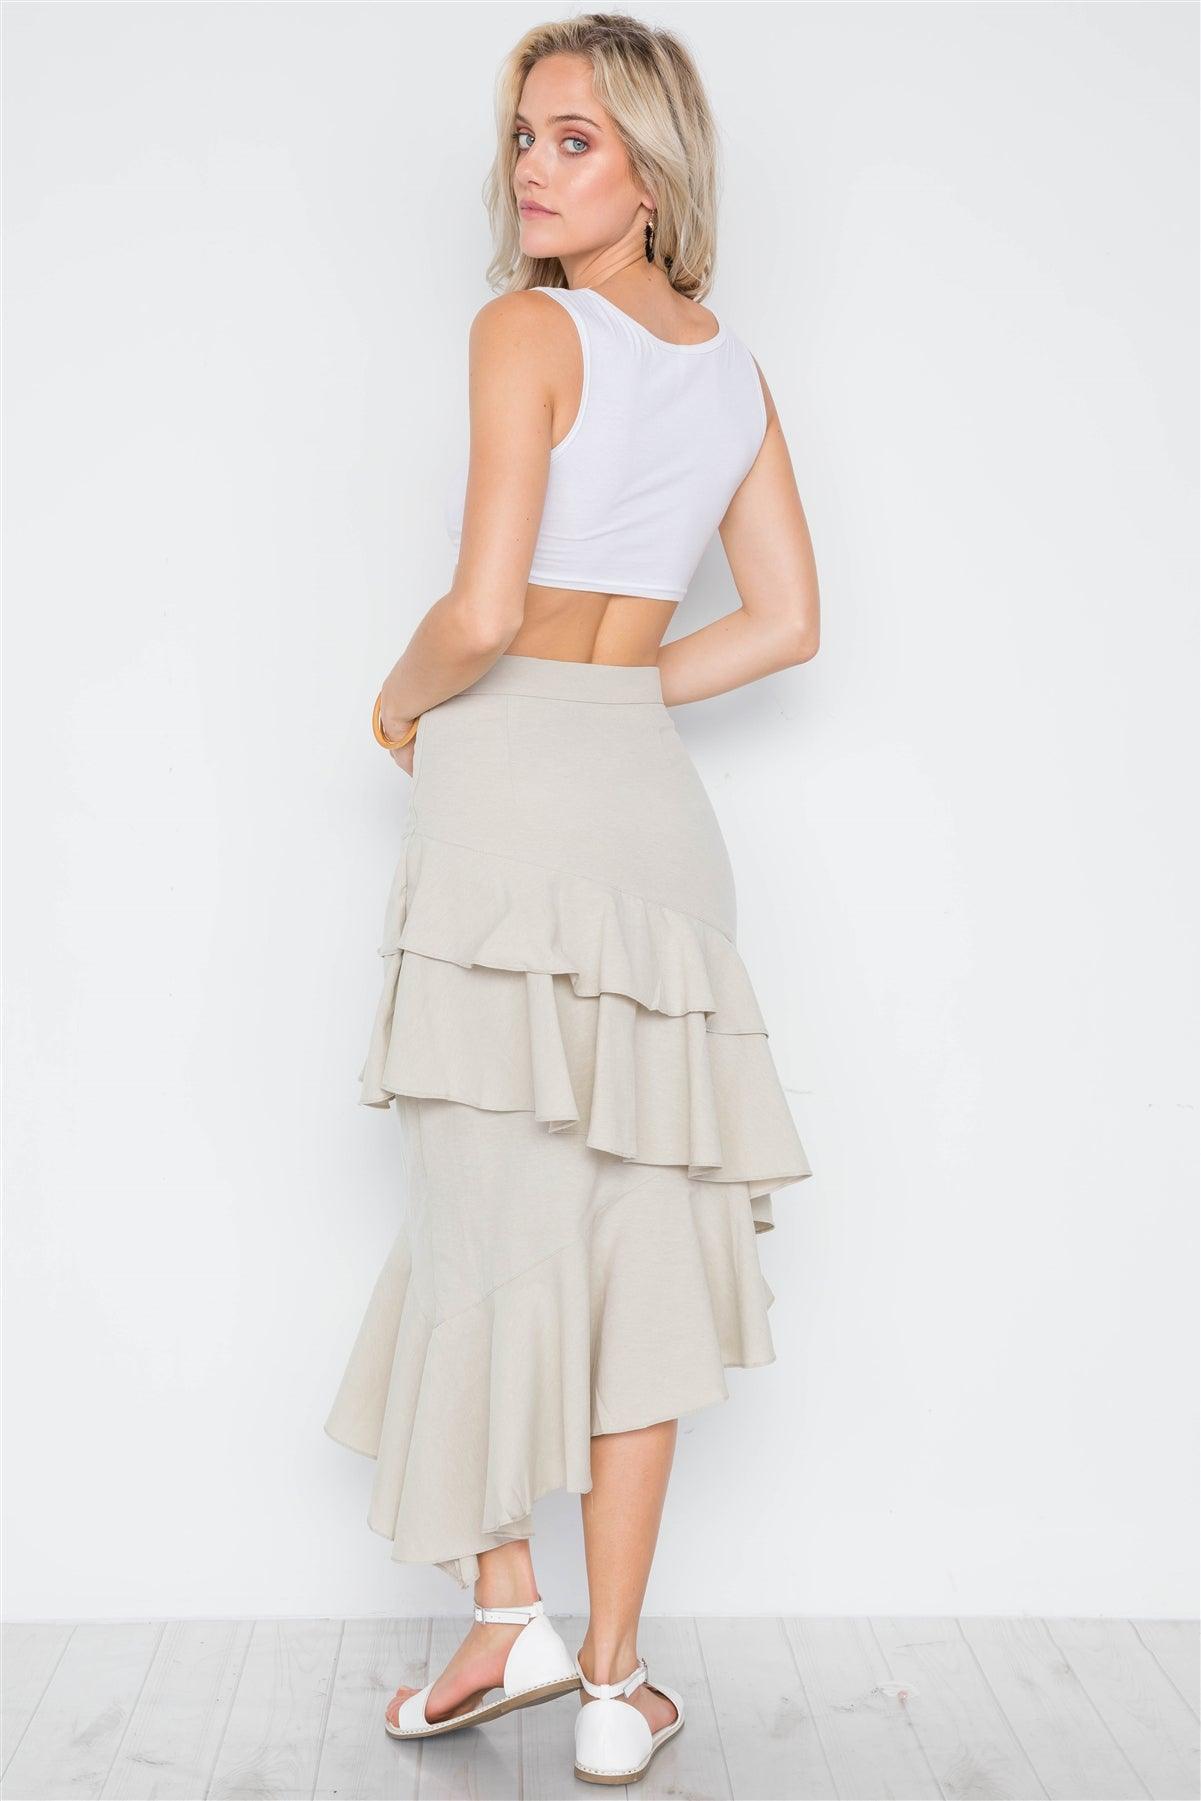 Brown Taupe Ruffle High-Waist Midi Skirt /2-2-2